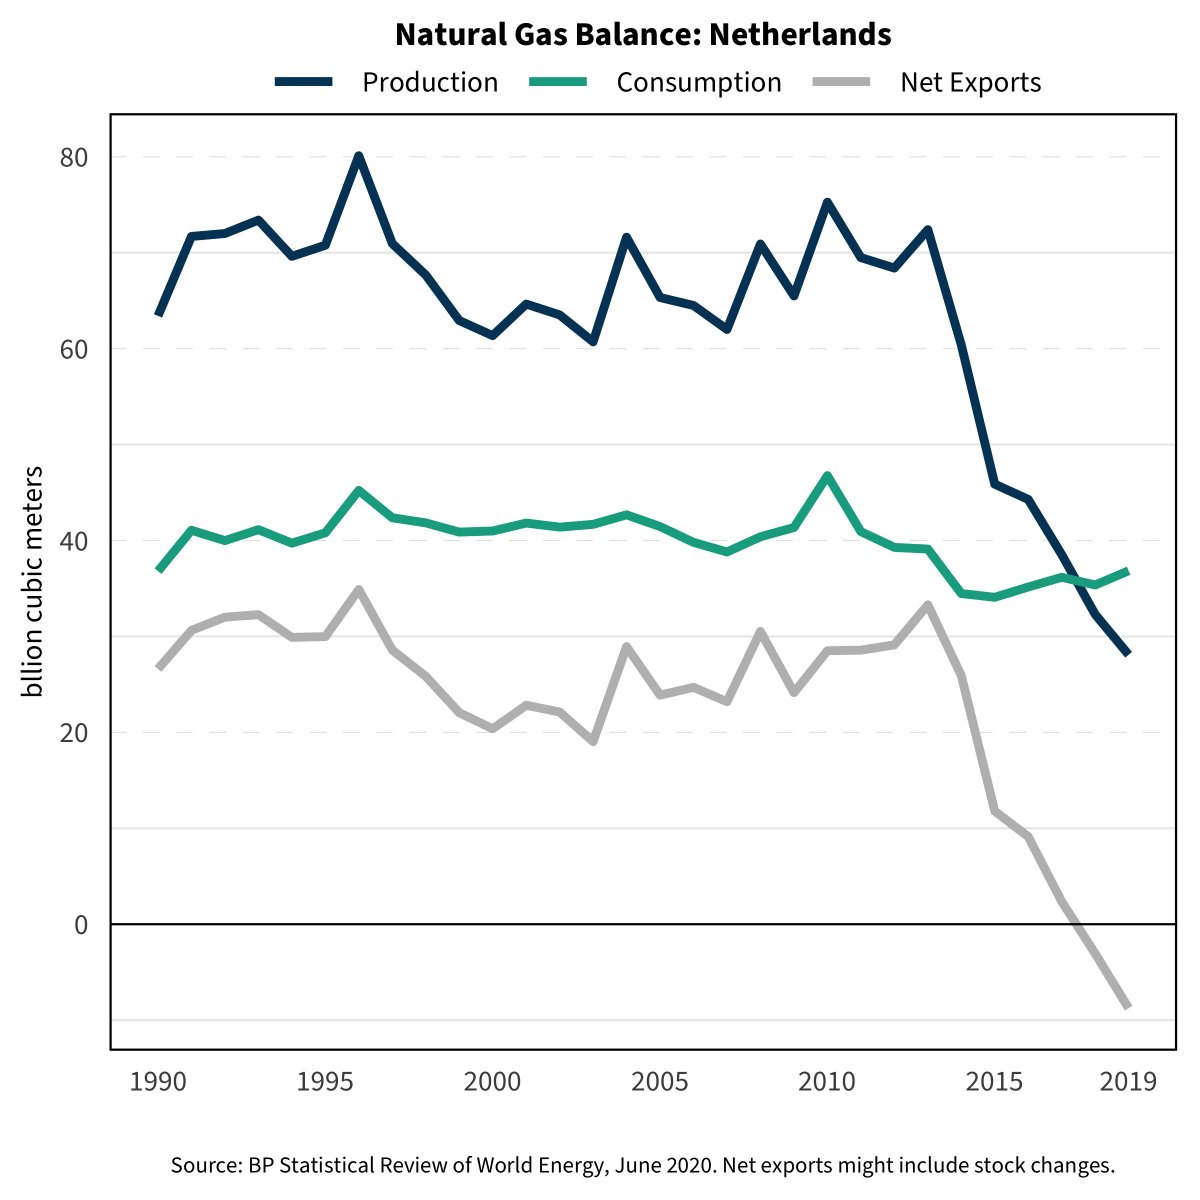 Collapsing European producers: Denmark, Finland, Netherlands